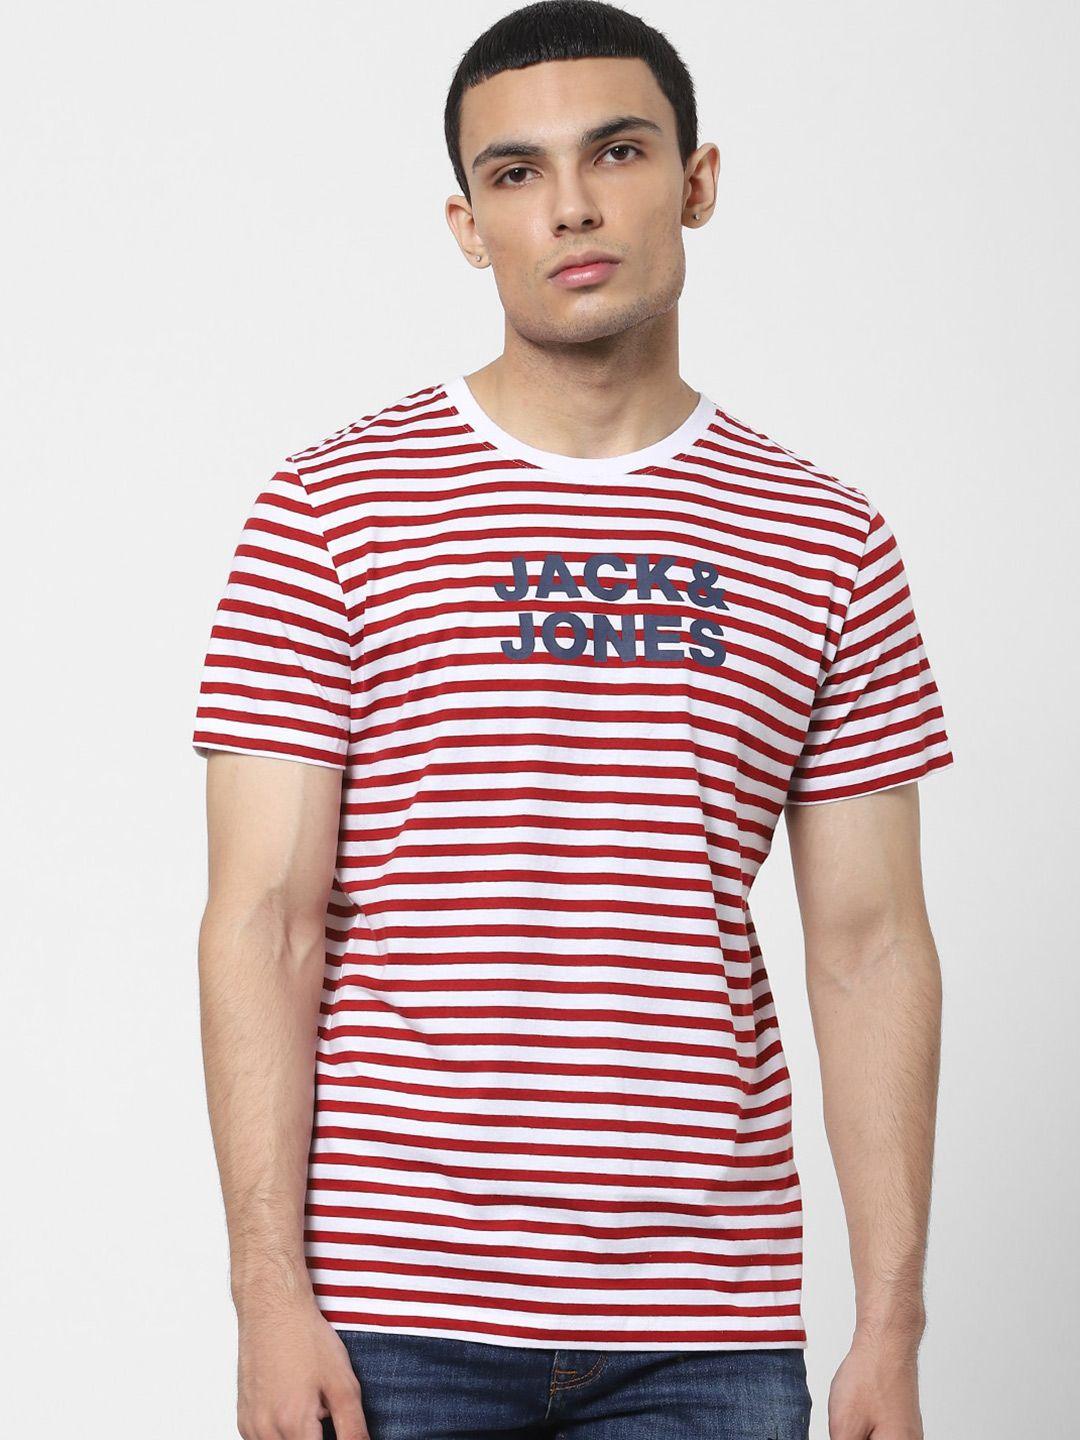 jack & jones men red & white horizontal striped casual t-shirt